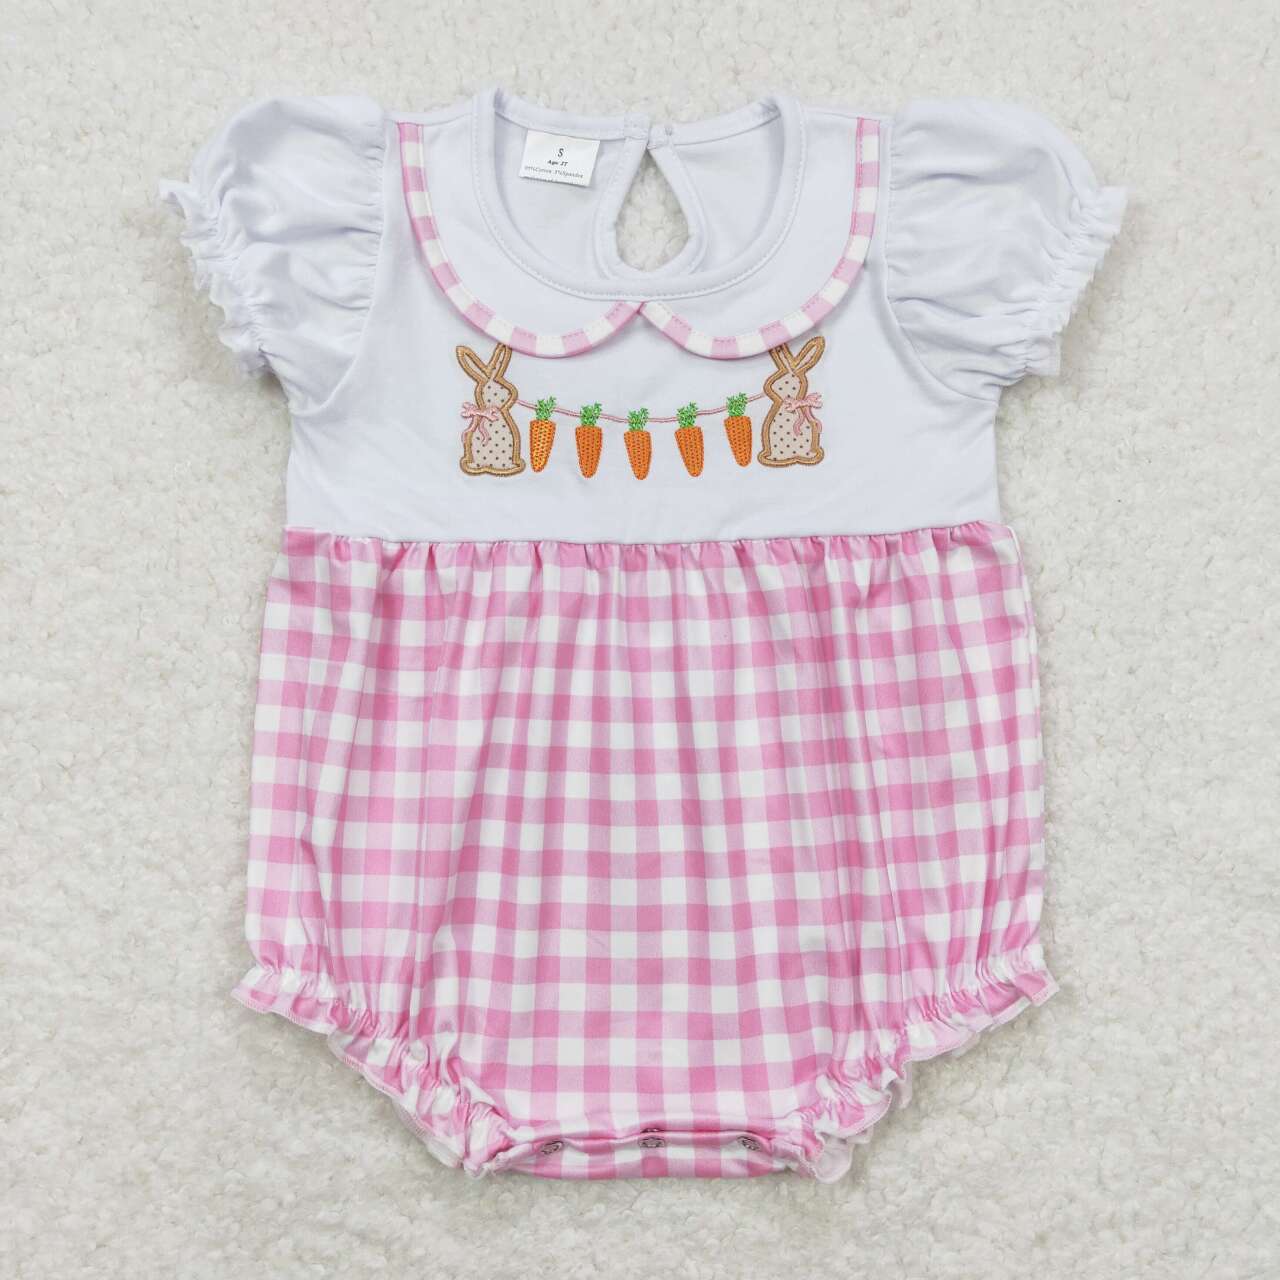 SR0722 Embroidered rabbit carrot pink-white checkered short-sleeved onesie